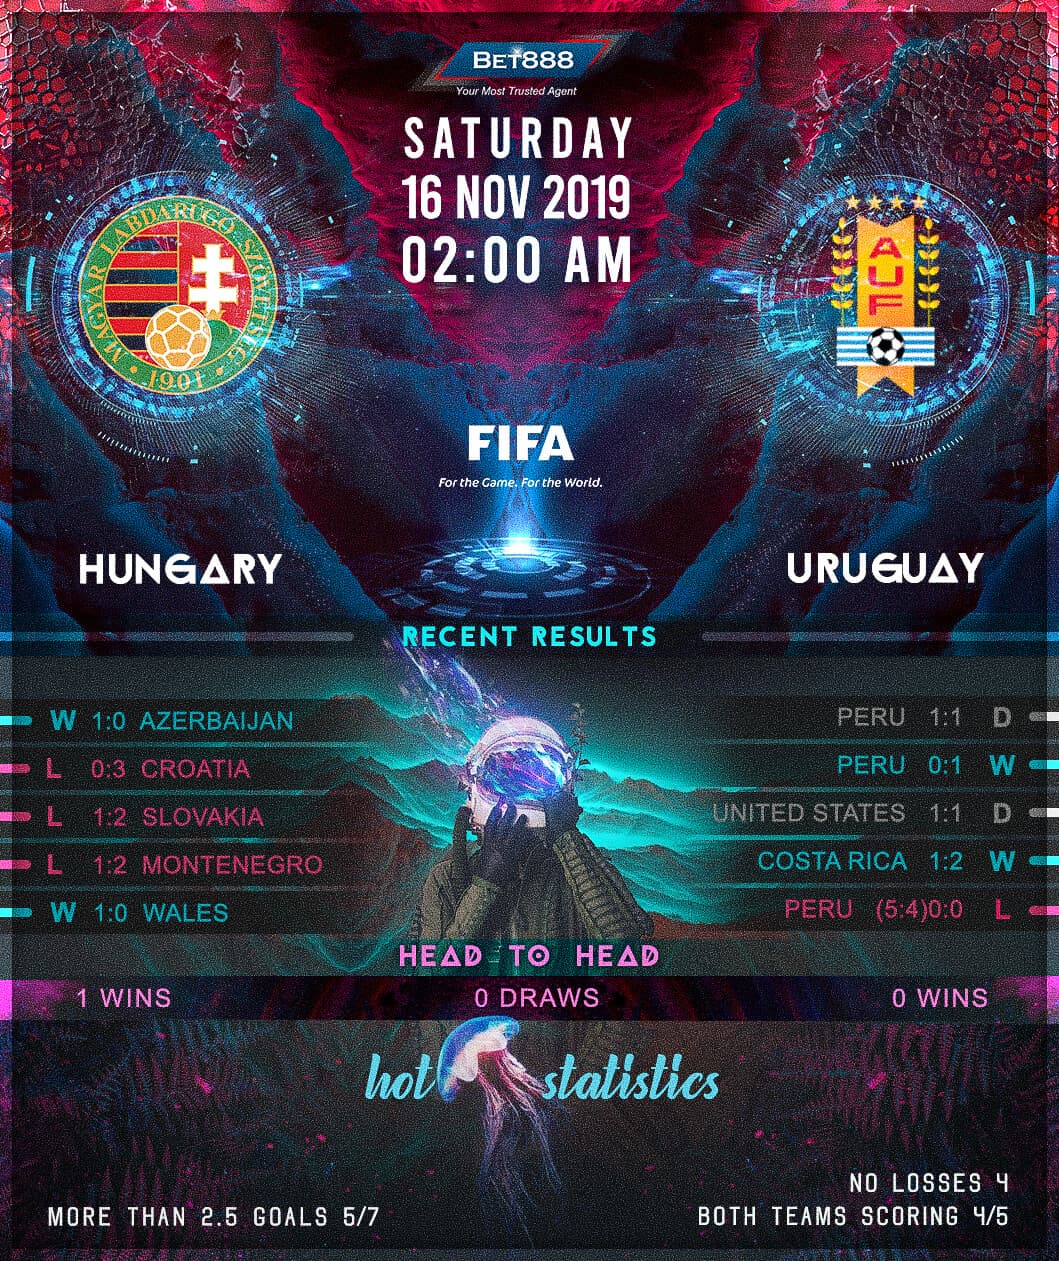 Hungary vs Uruguay﻿ 16/11/19